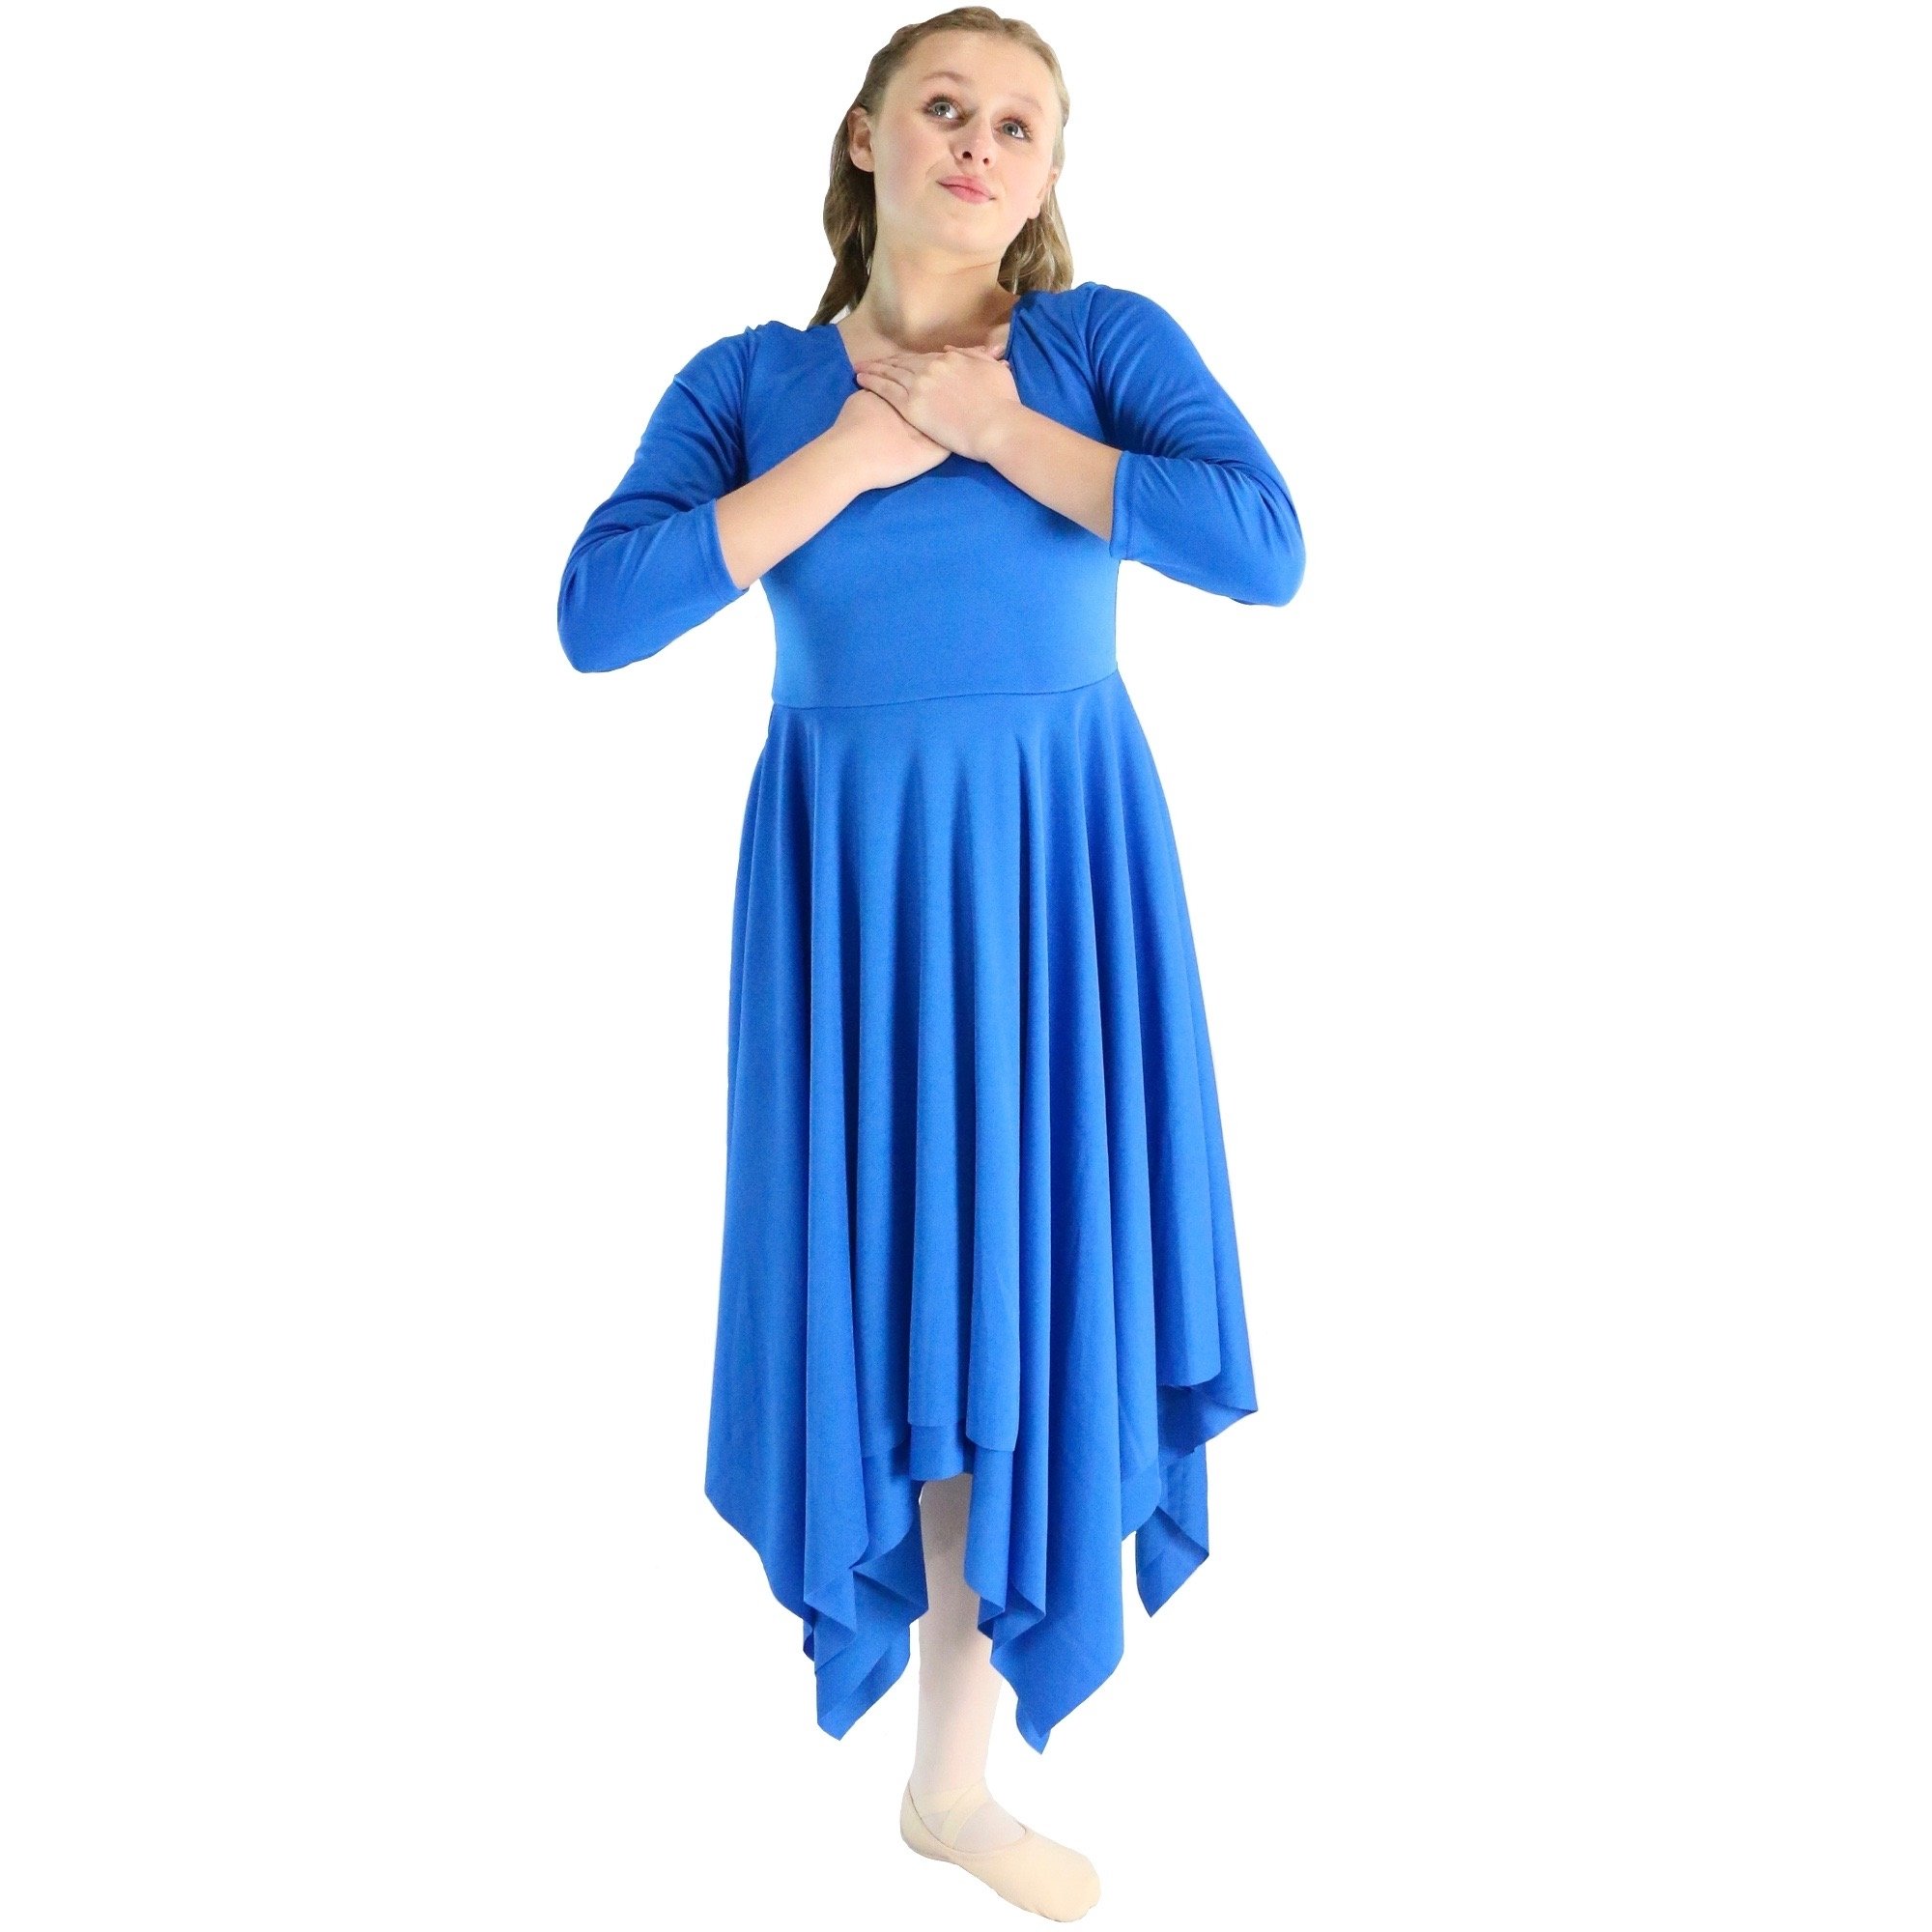 Danzcue Celebration of Spirit Long Sleeve Child Praise Dance Dress - Click Image to Close